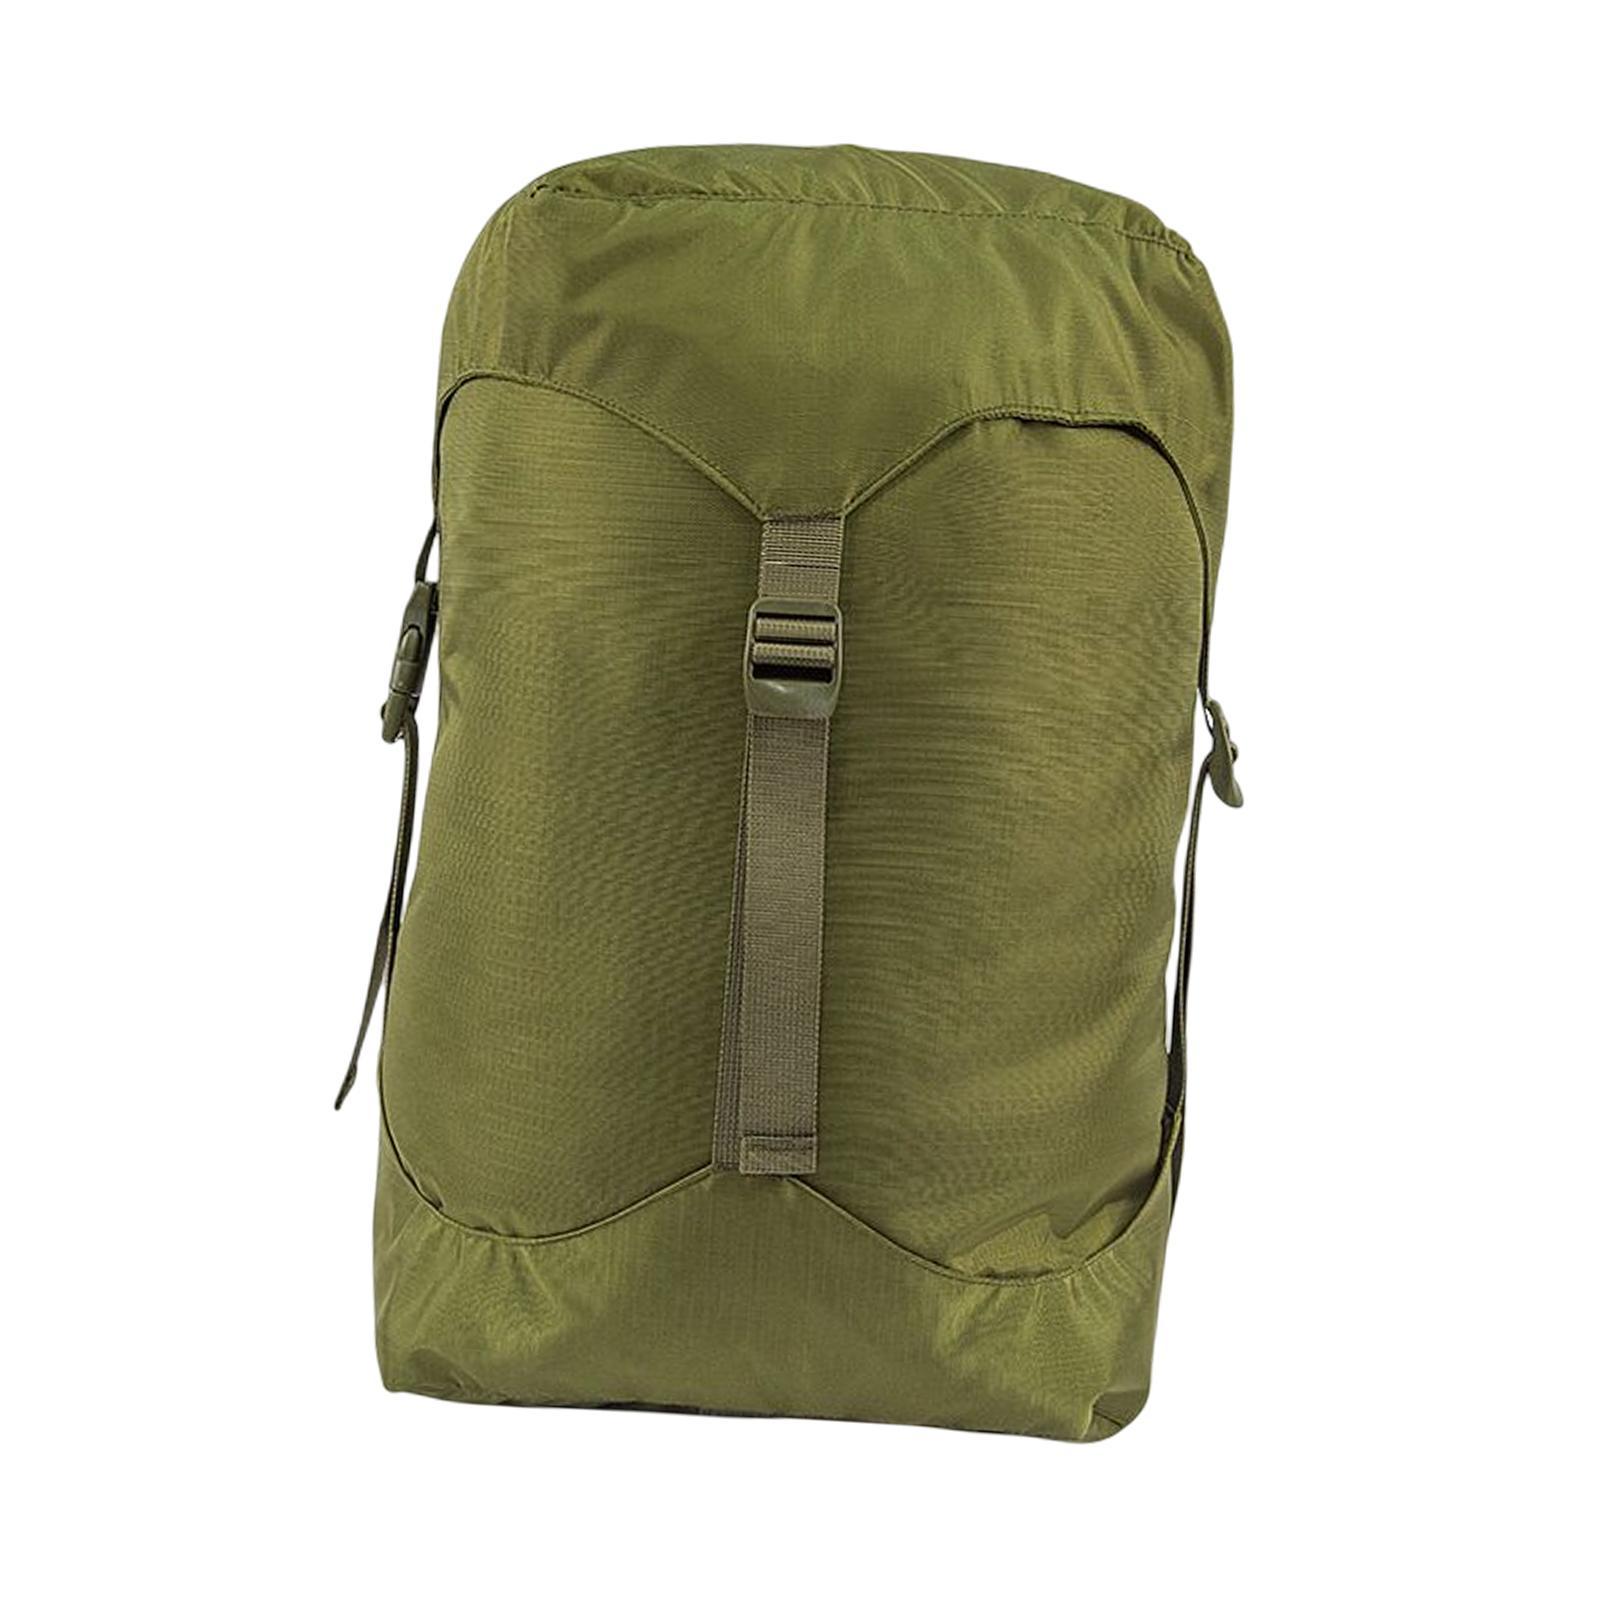 Compression Sack for Sleeping Bag Outdoor Compression Bag Ultralight Clothes Storage Bag Sleeping Bag Stuff Sack for Hiking Backpacking